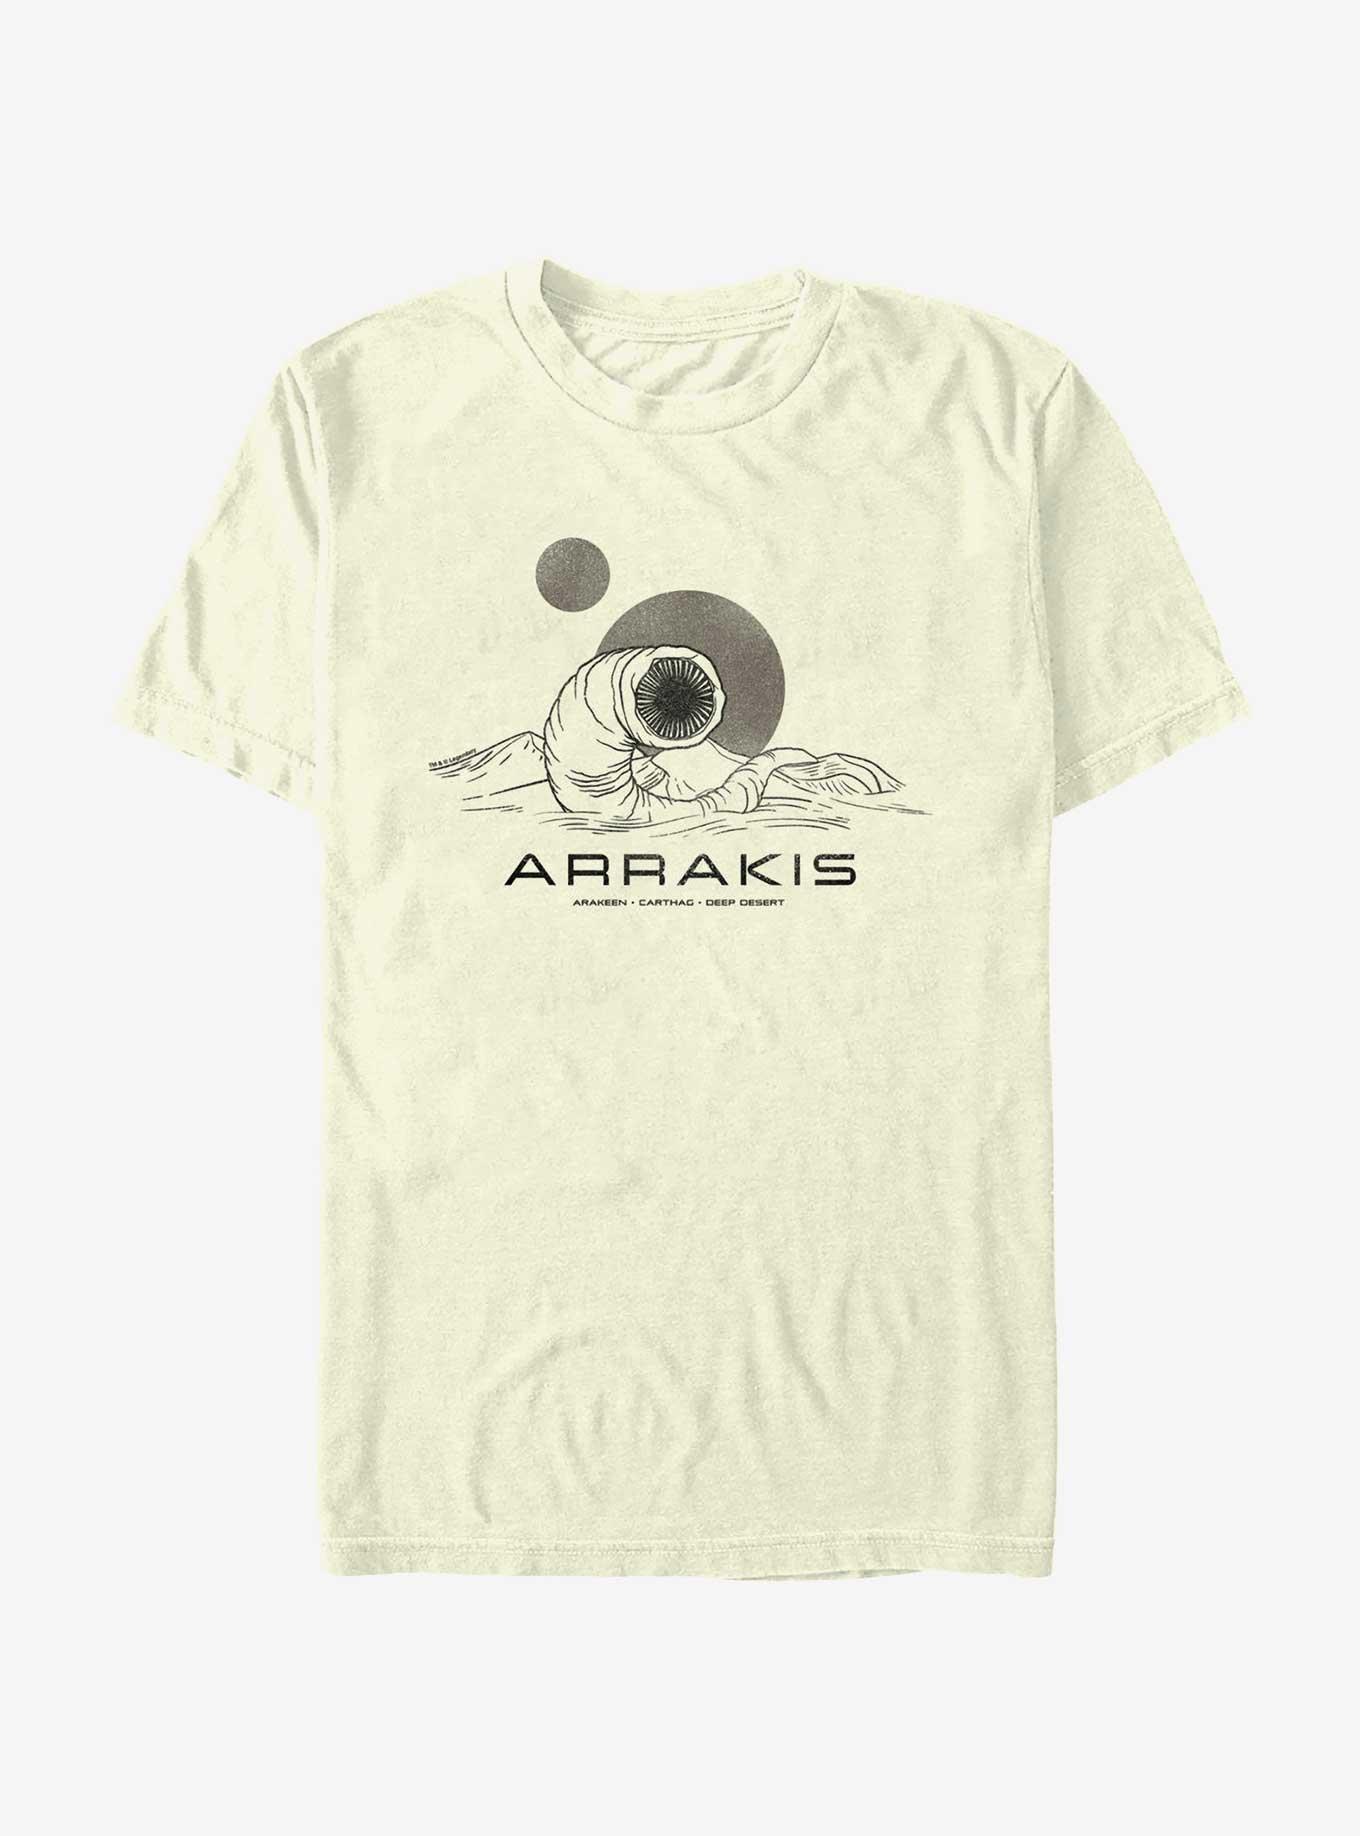 Dune: Part Two Arrakis Worm T-Shirt